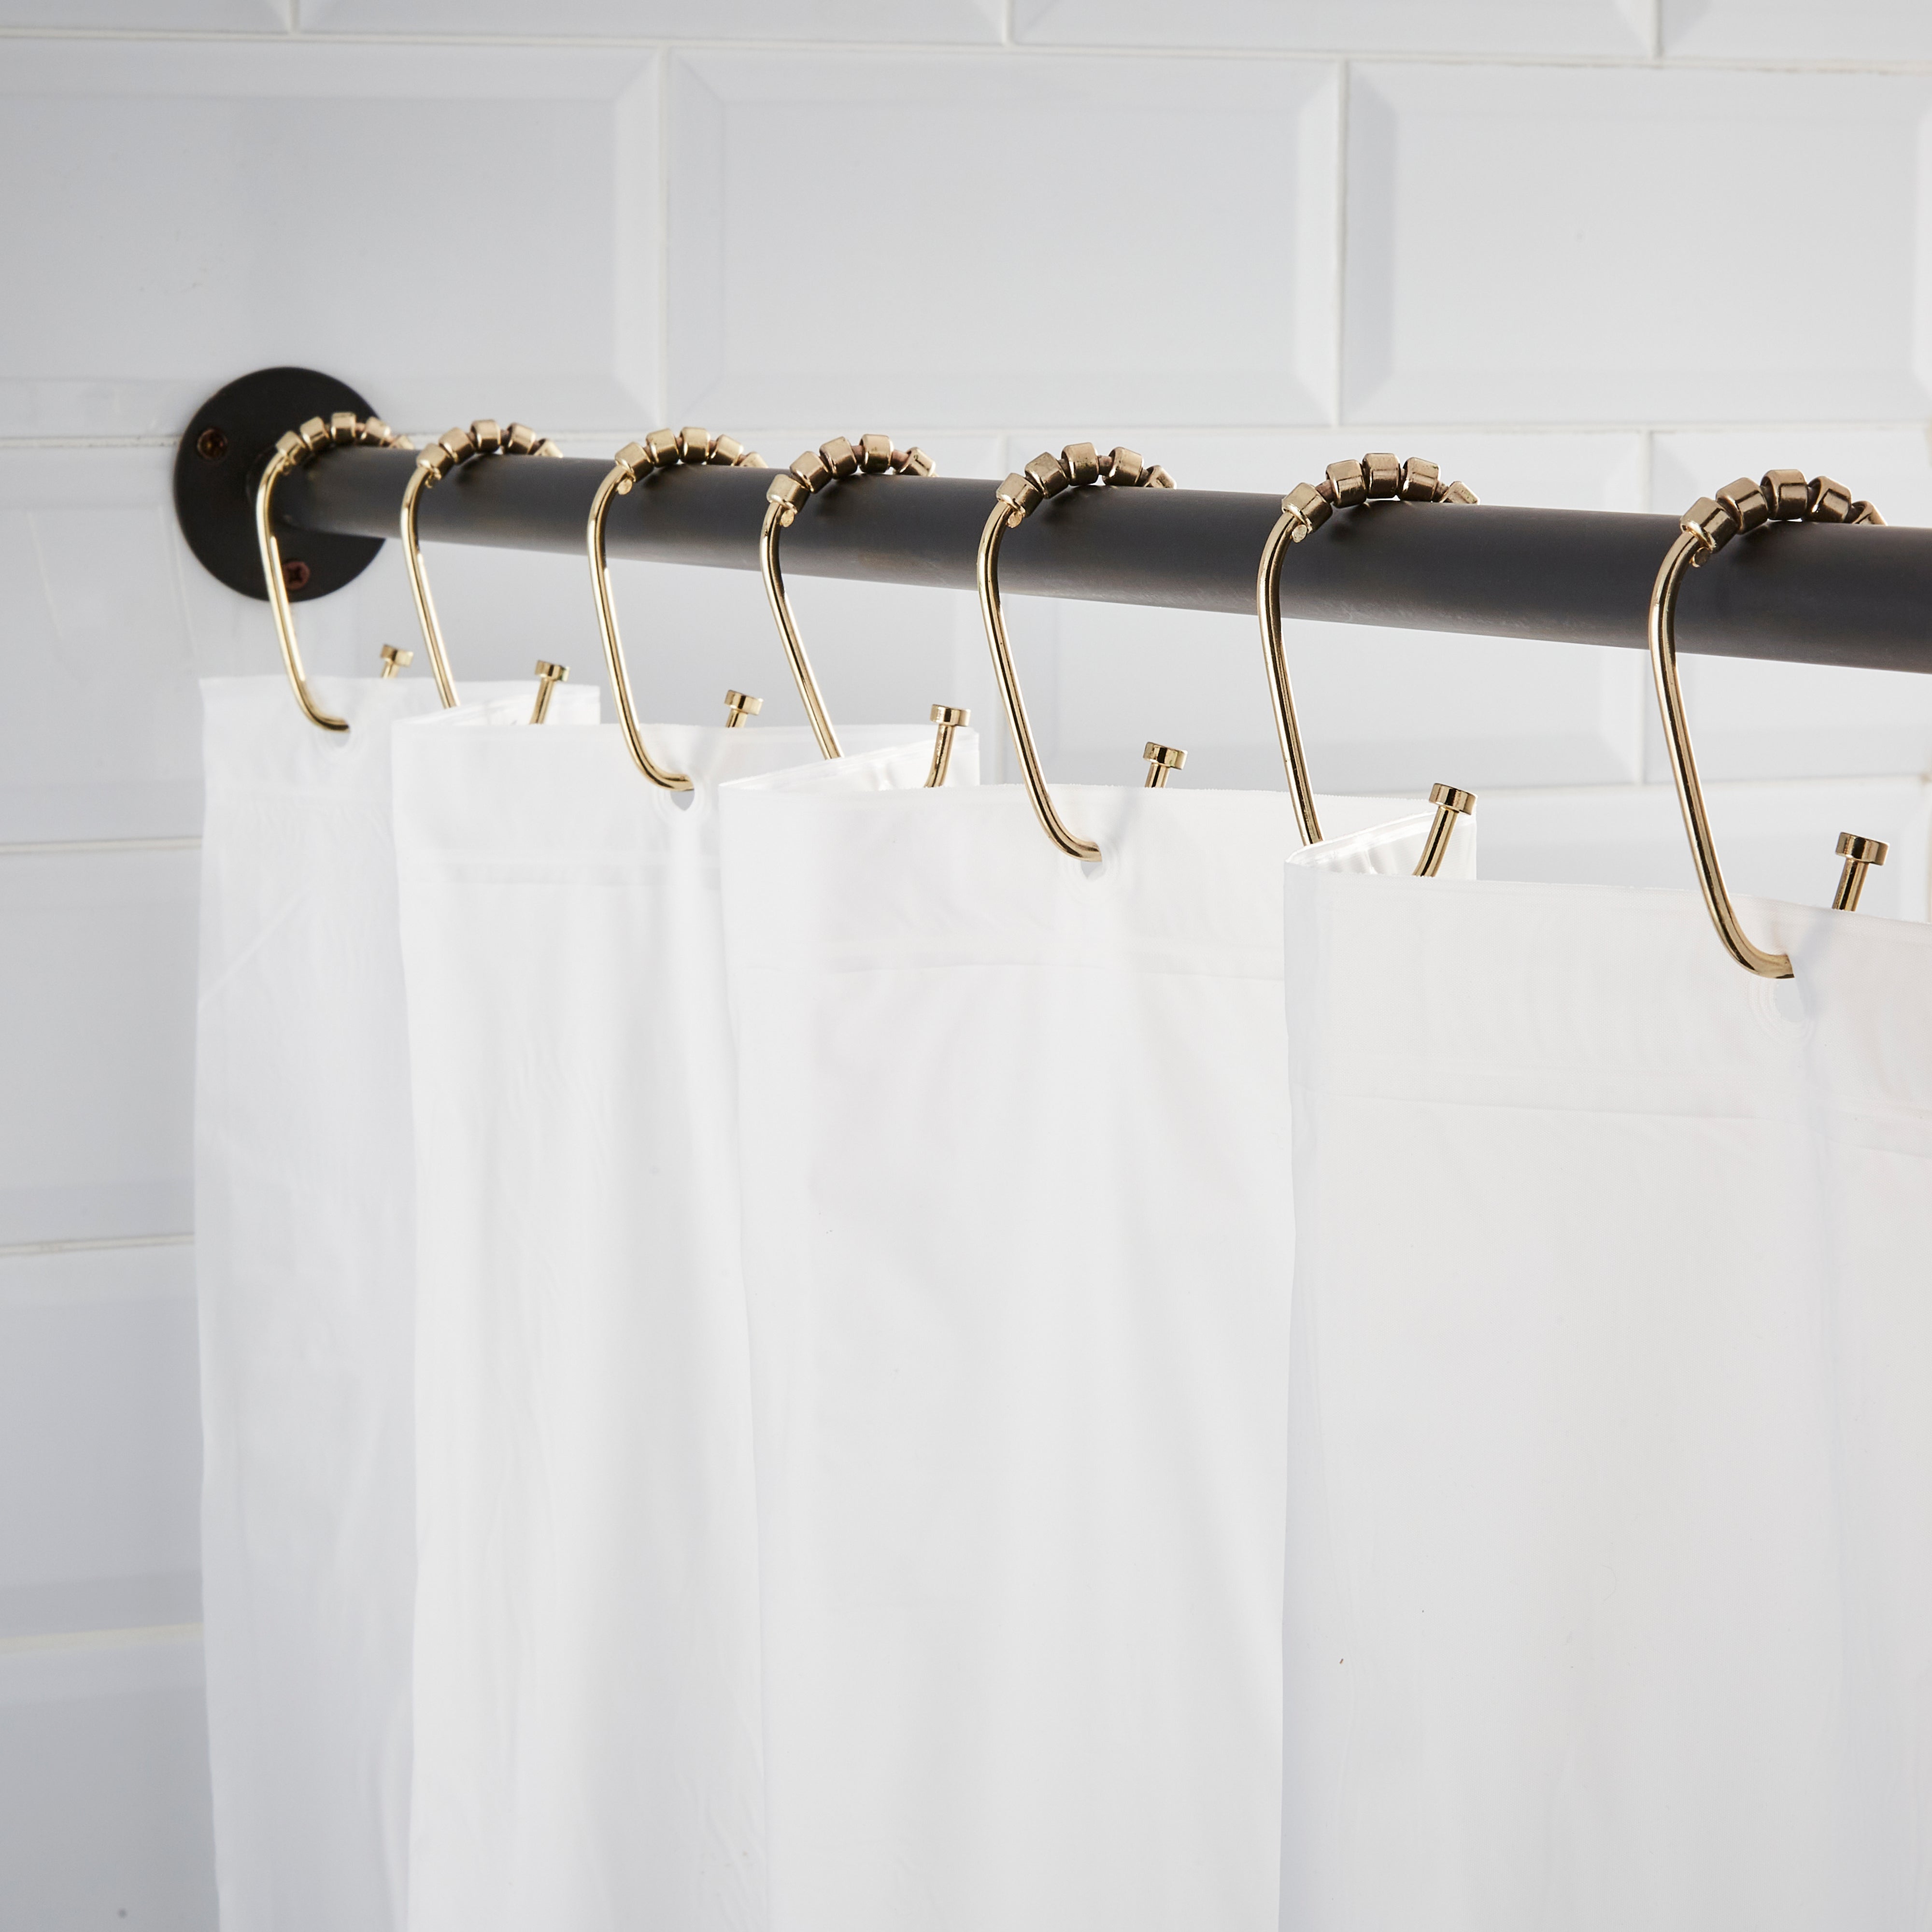 Shower Curtains, Rails & Hooks